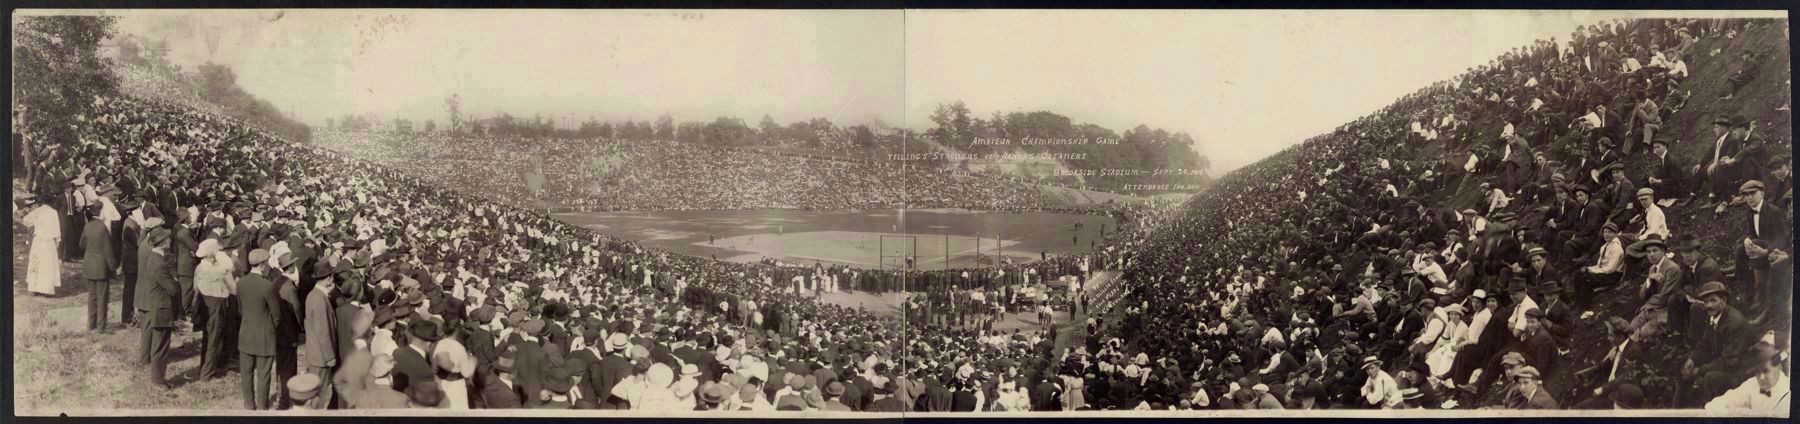 Amateur Championship Game, Brookside Stadium, September 20, 1914 image. Click for full size.